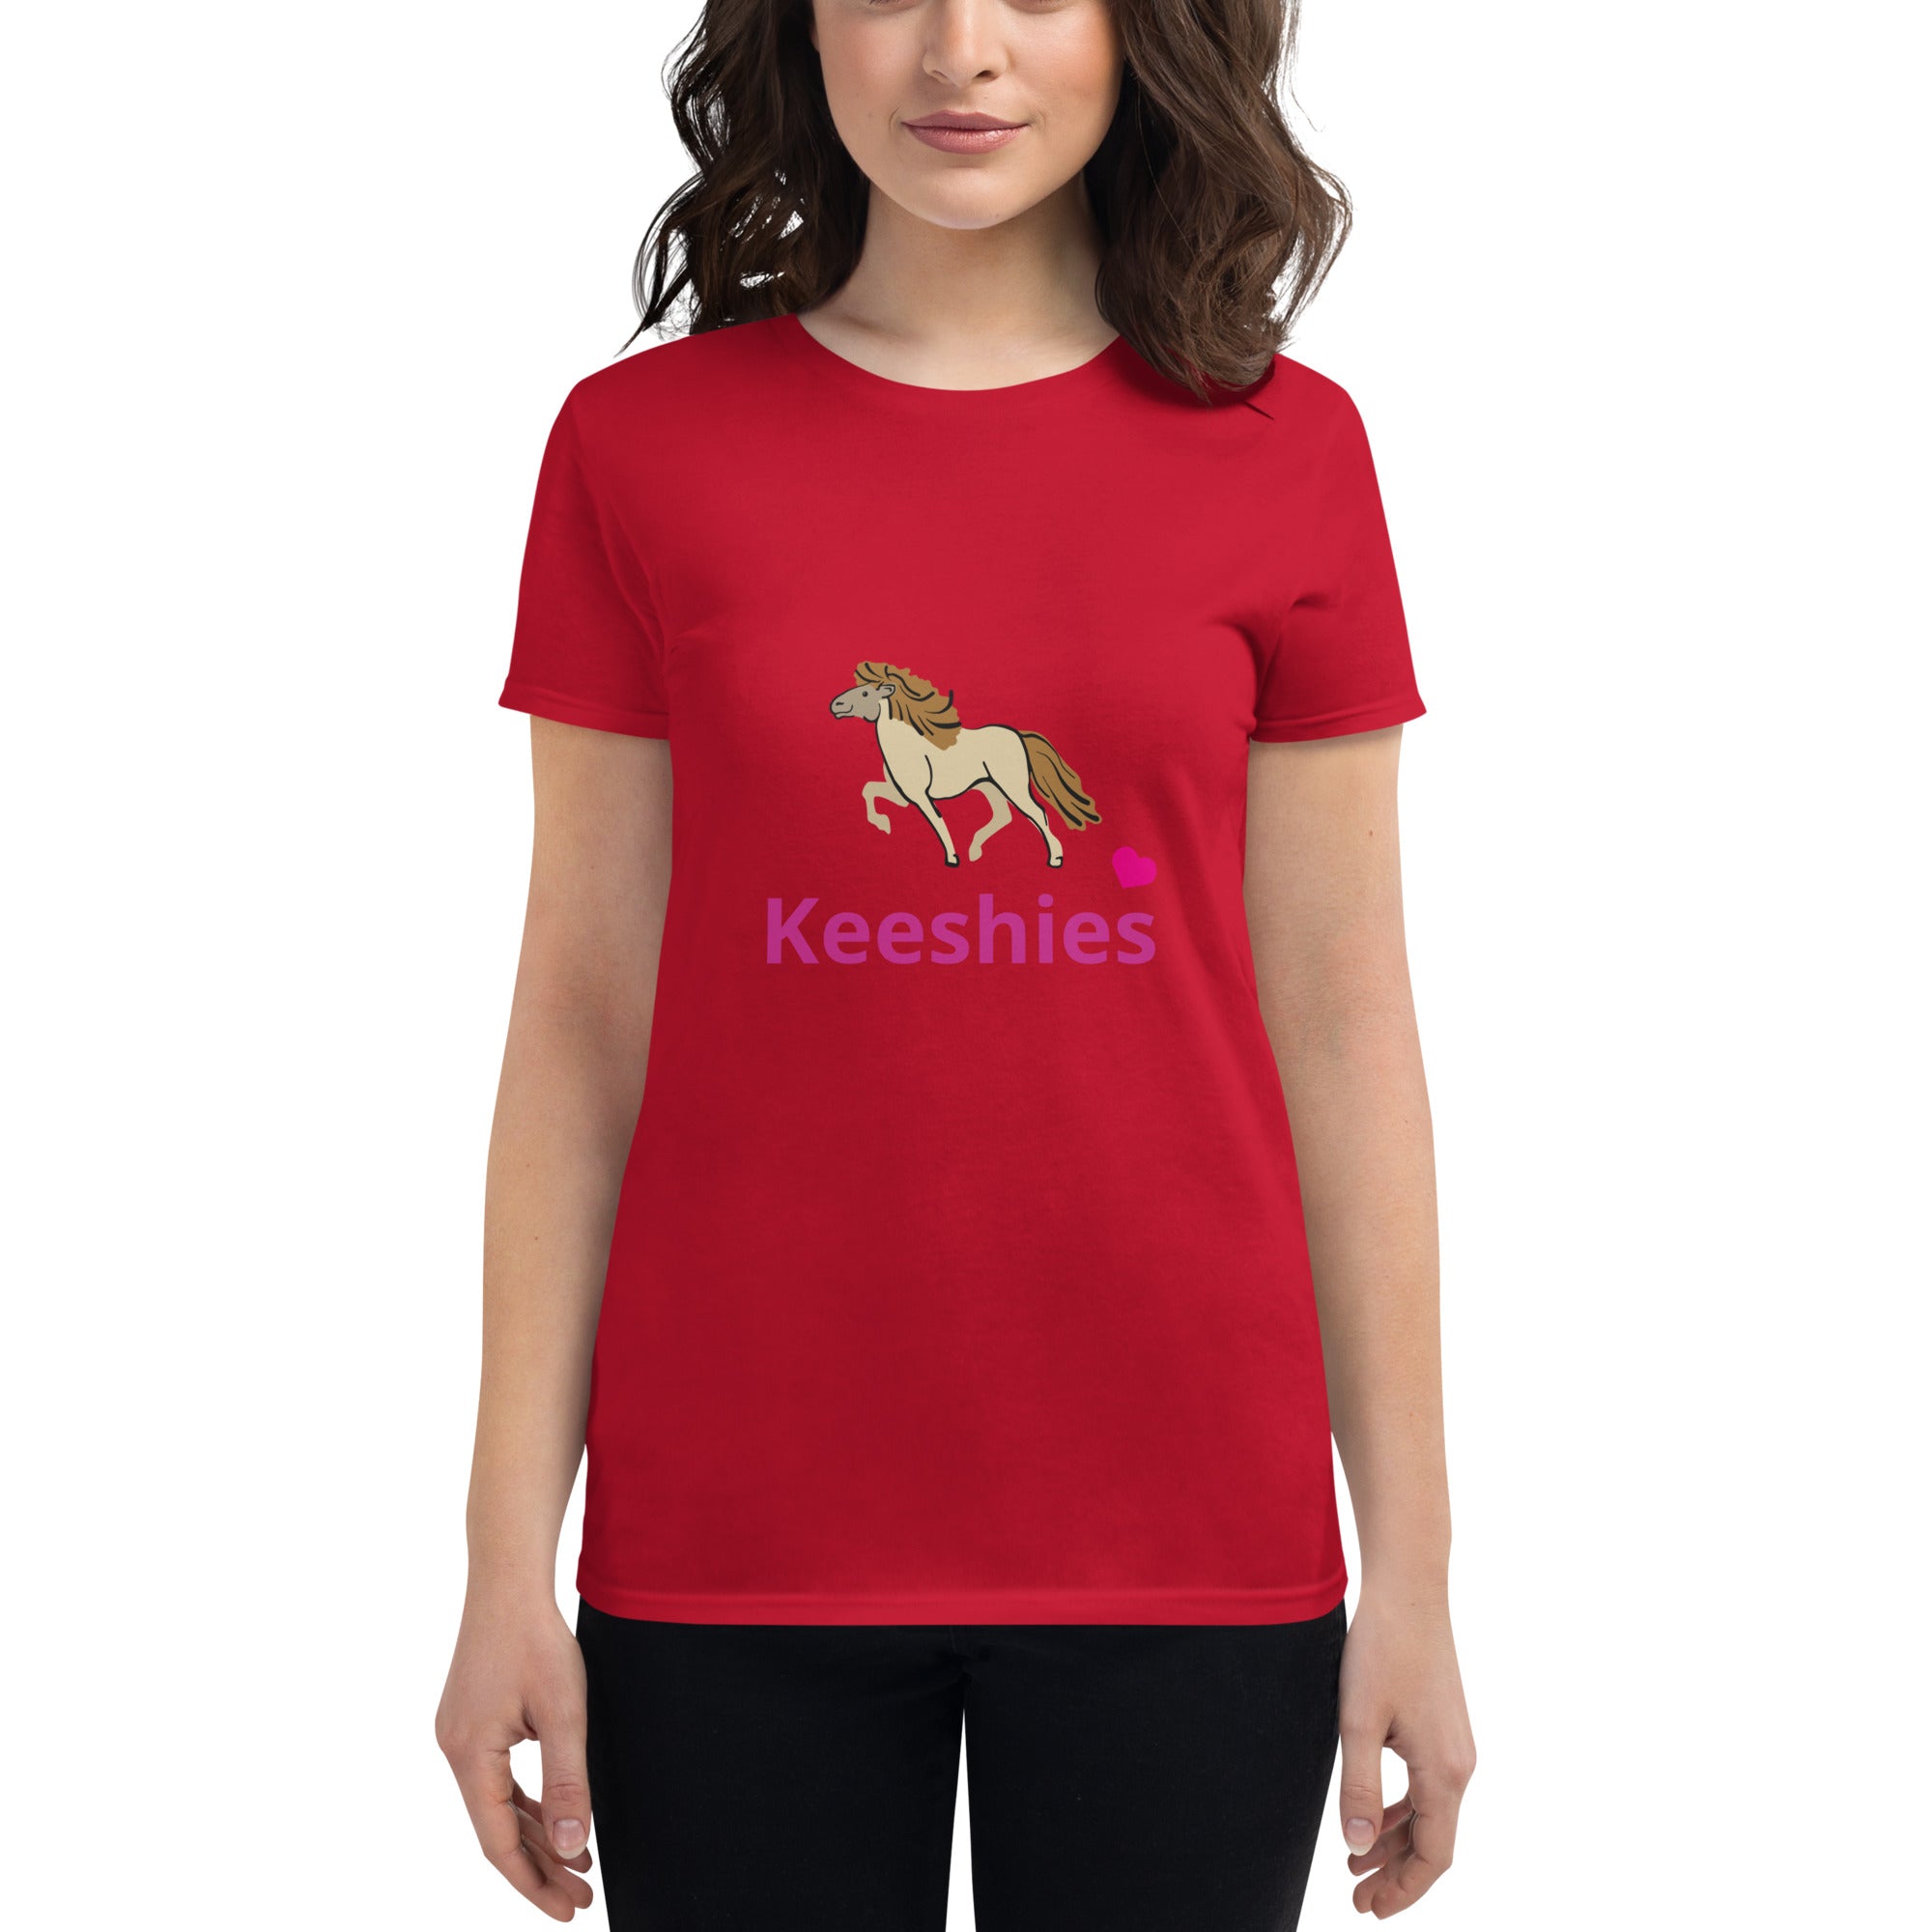 Kommi Keeshies short sleeve t-shirt